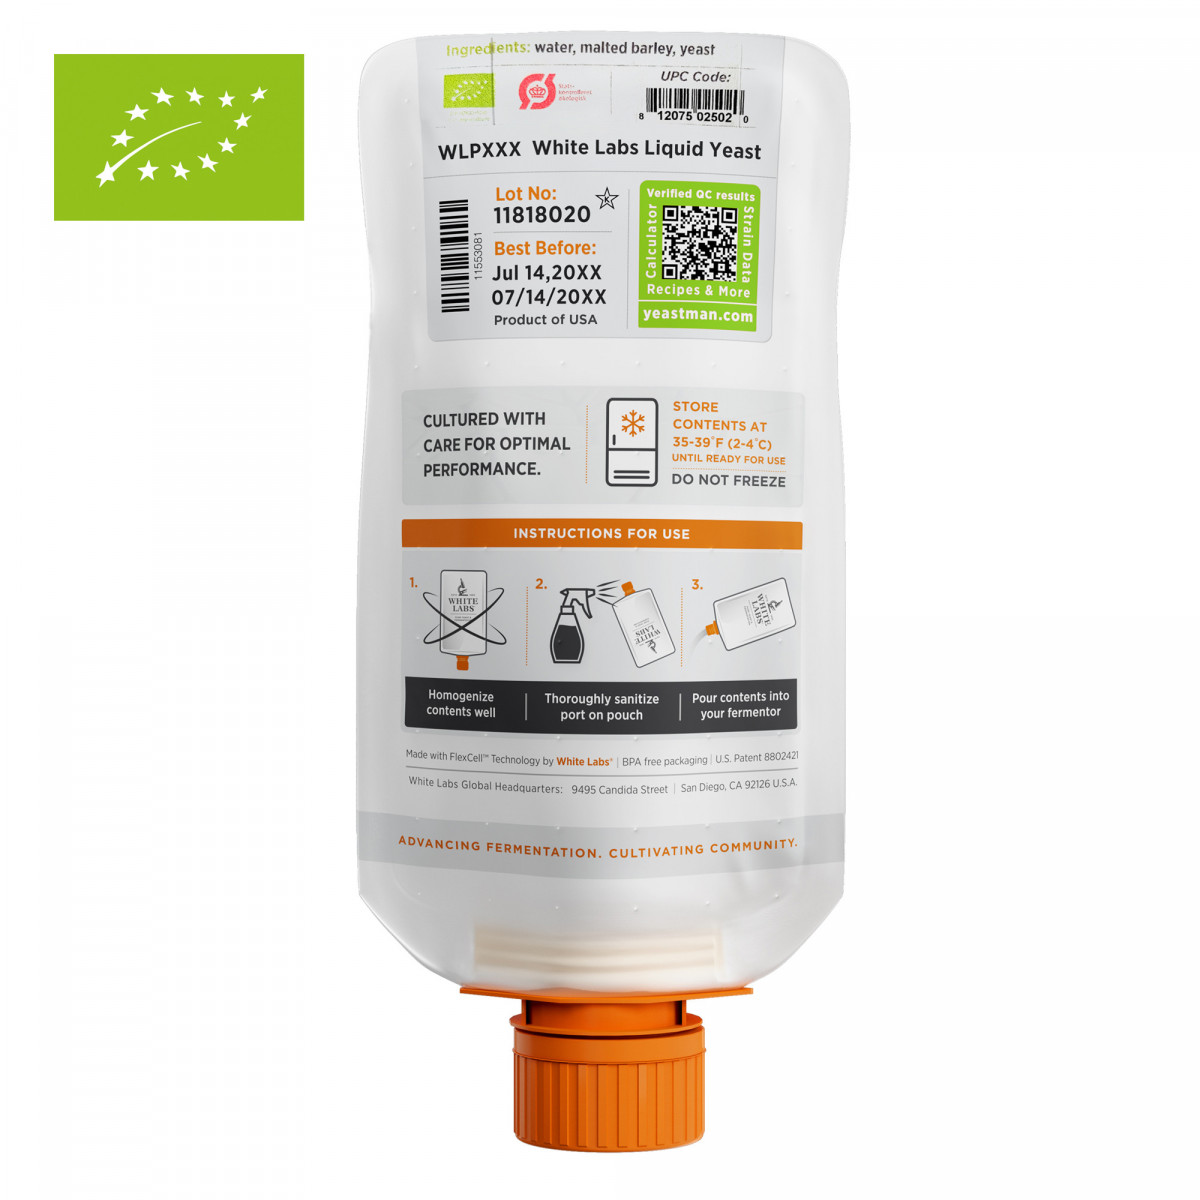 Levure liquide Bio WLP410-O Belgian Wit II Ale - White Labs - PurePitch™ Next Generation